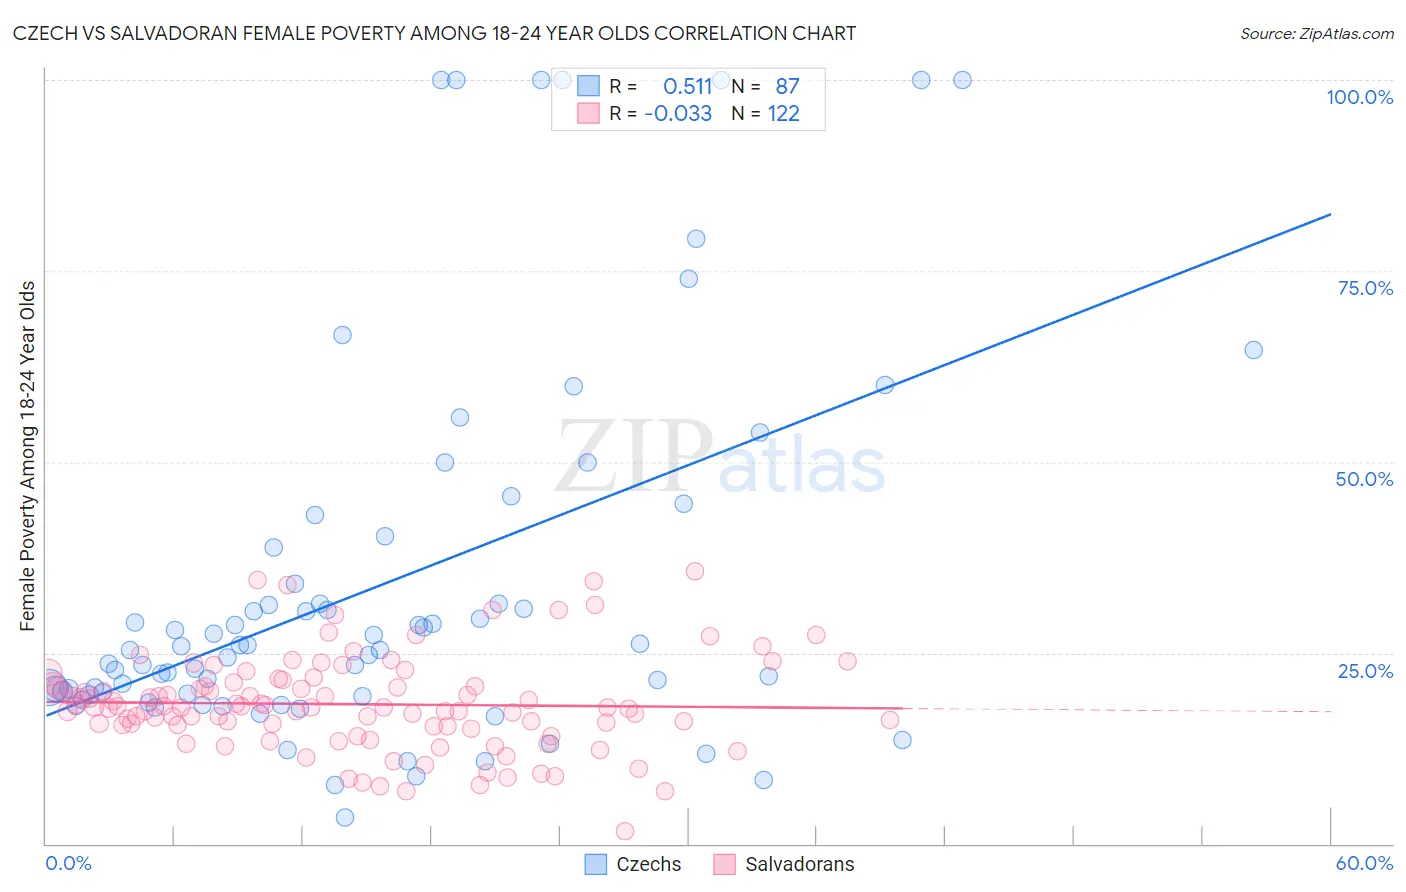 Czech vs Salvadoran Female Poverty Among 18-24 Year Olds